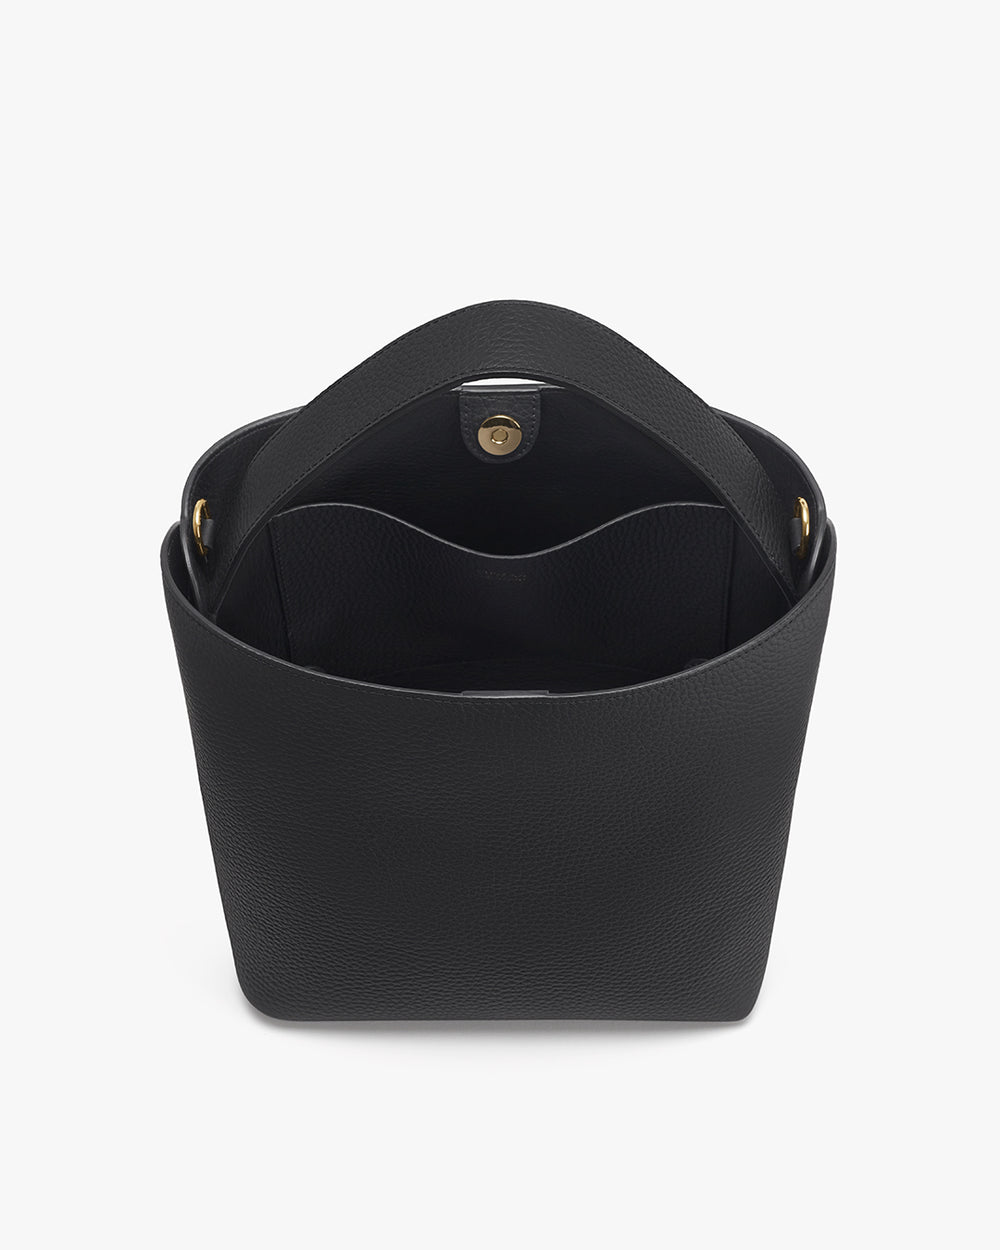 Tin Marin Brand Yaya Leather Bucket Bag